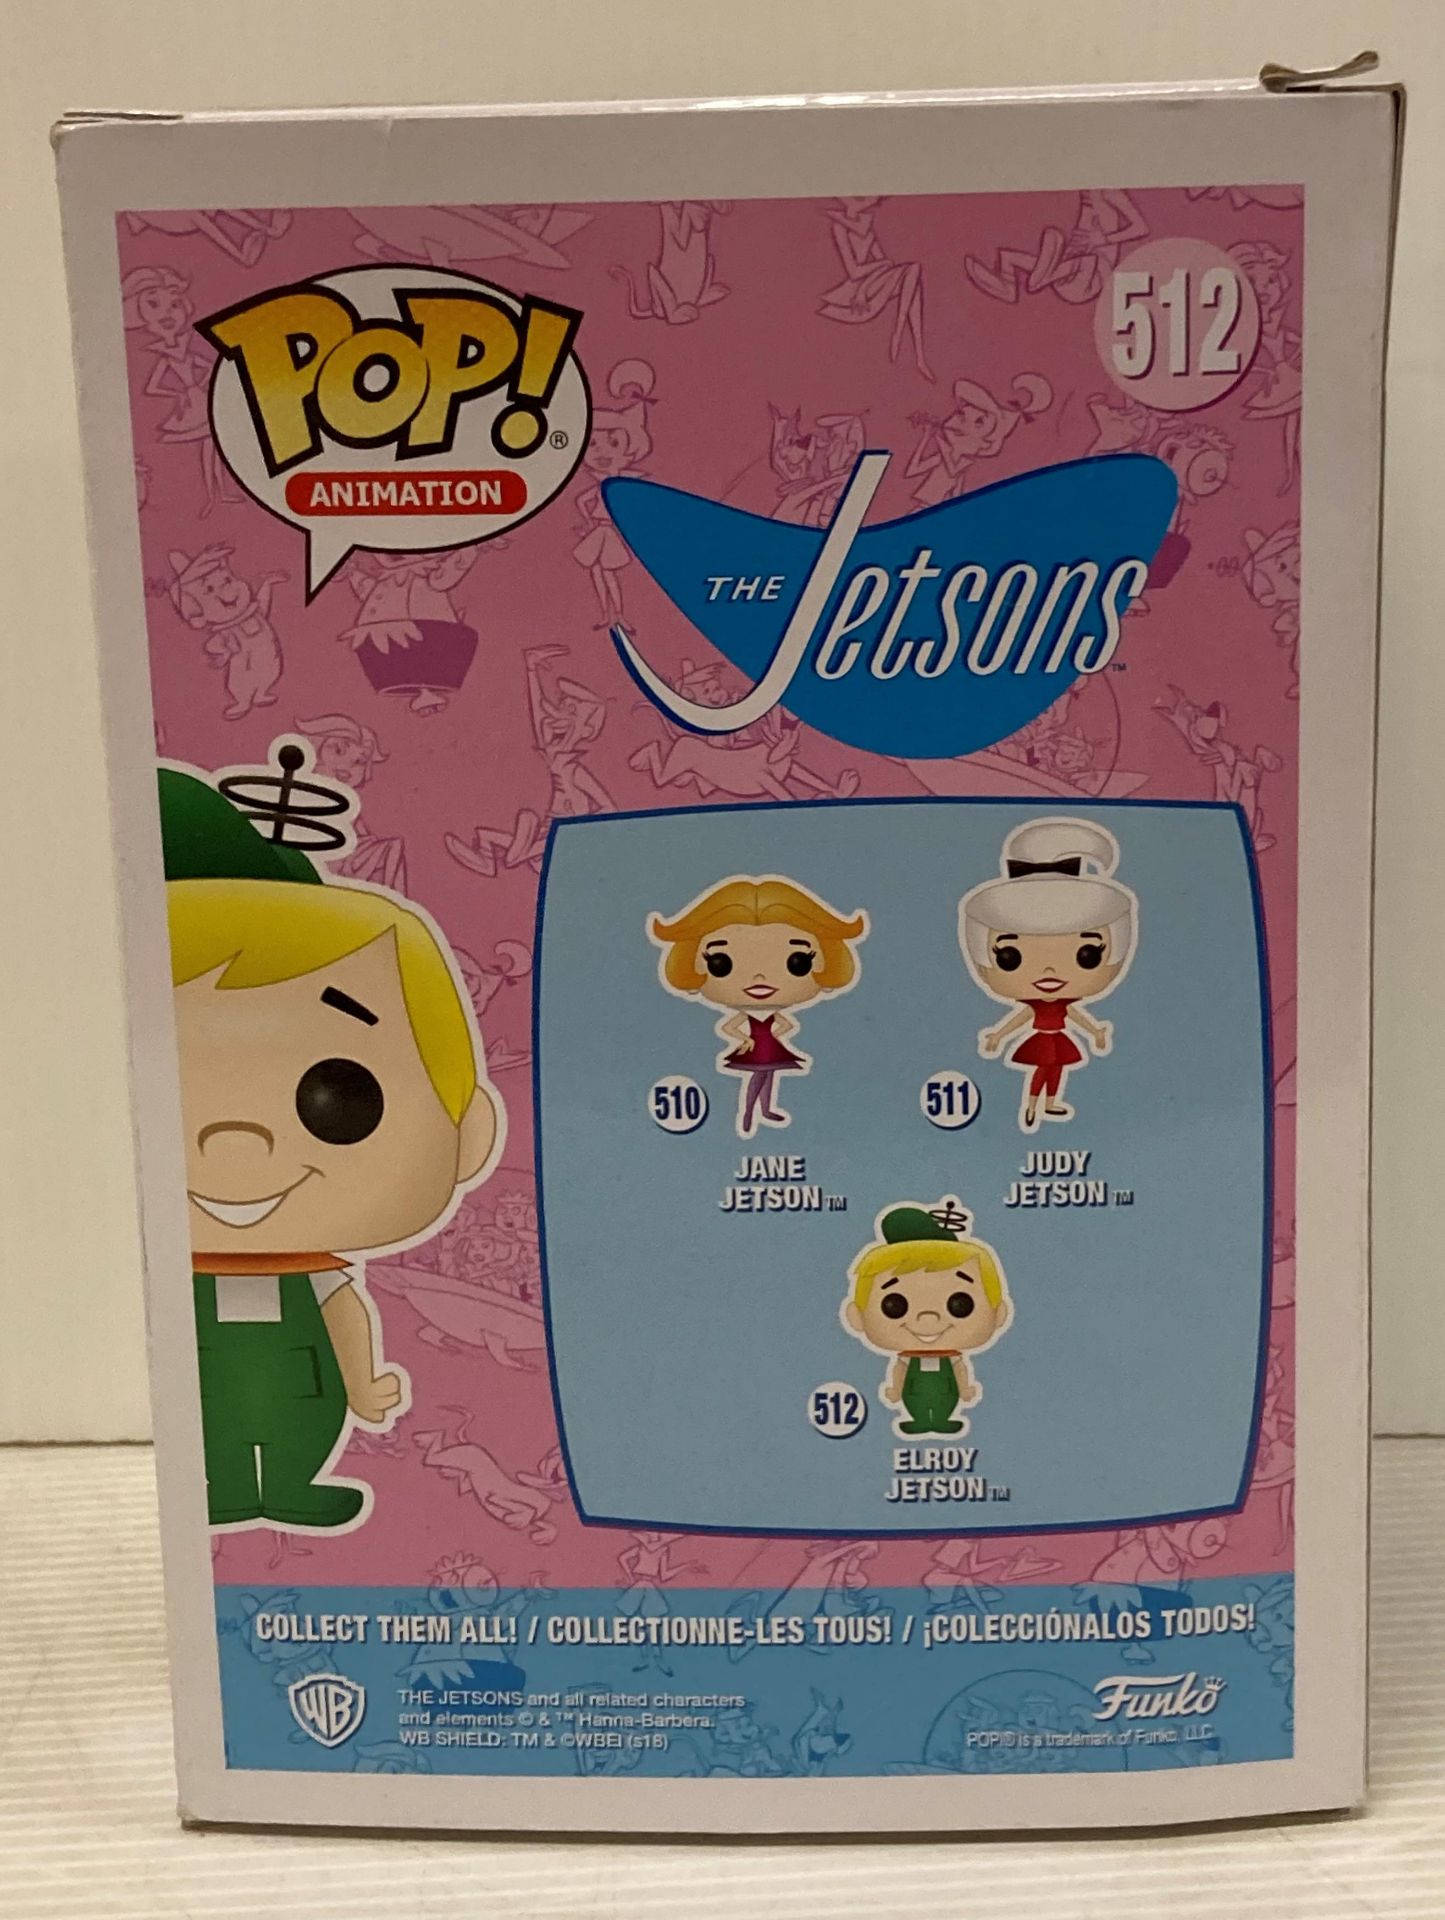 21 x Funko POP! The Jetsons: Elroy Jetson vinyl figurine (saleroom location: L05) Further - Image 2 of 2